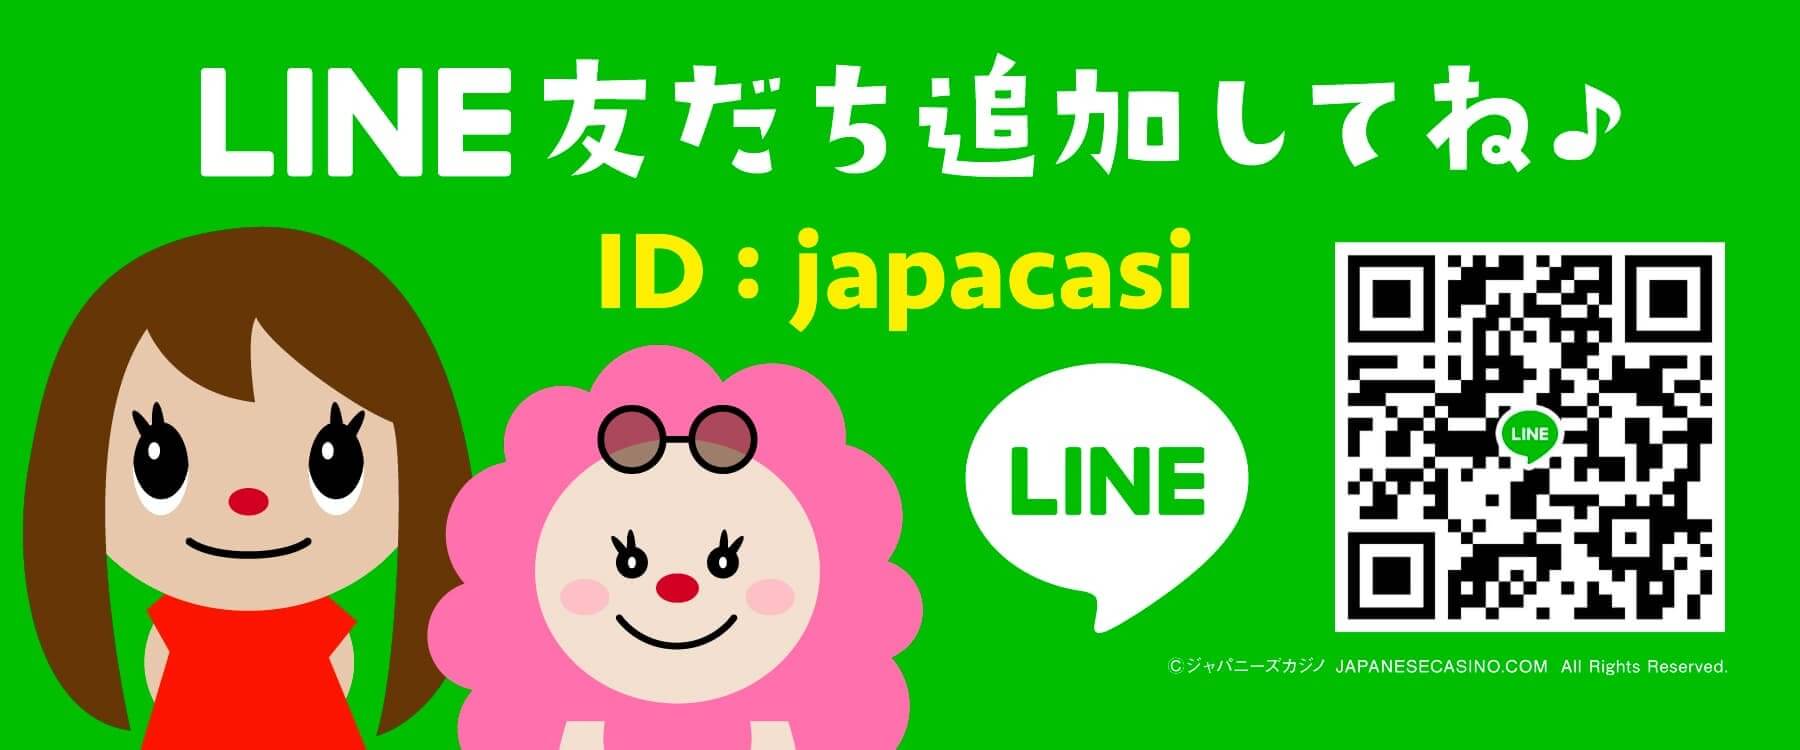 japacasi-line